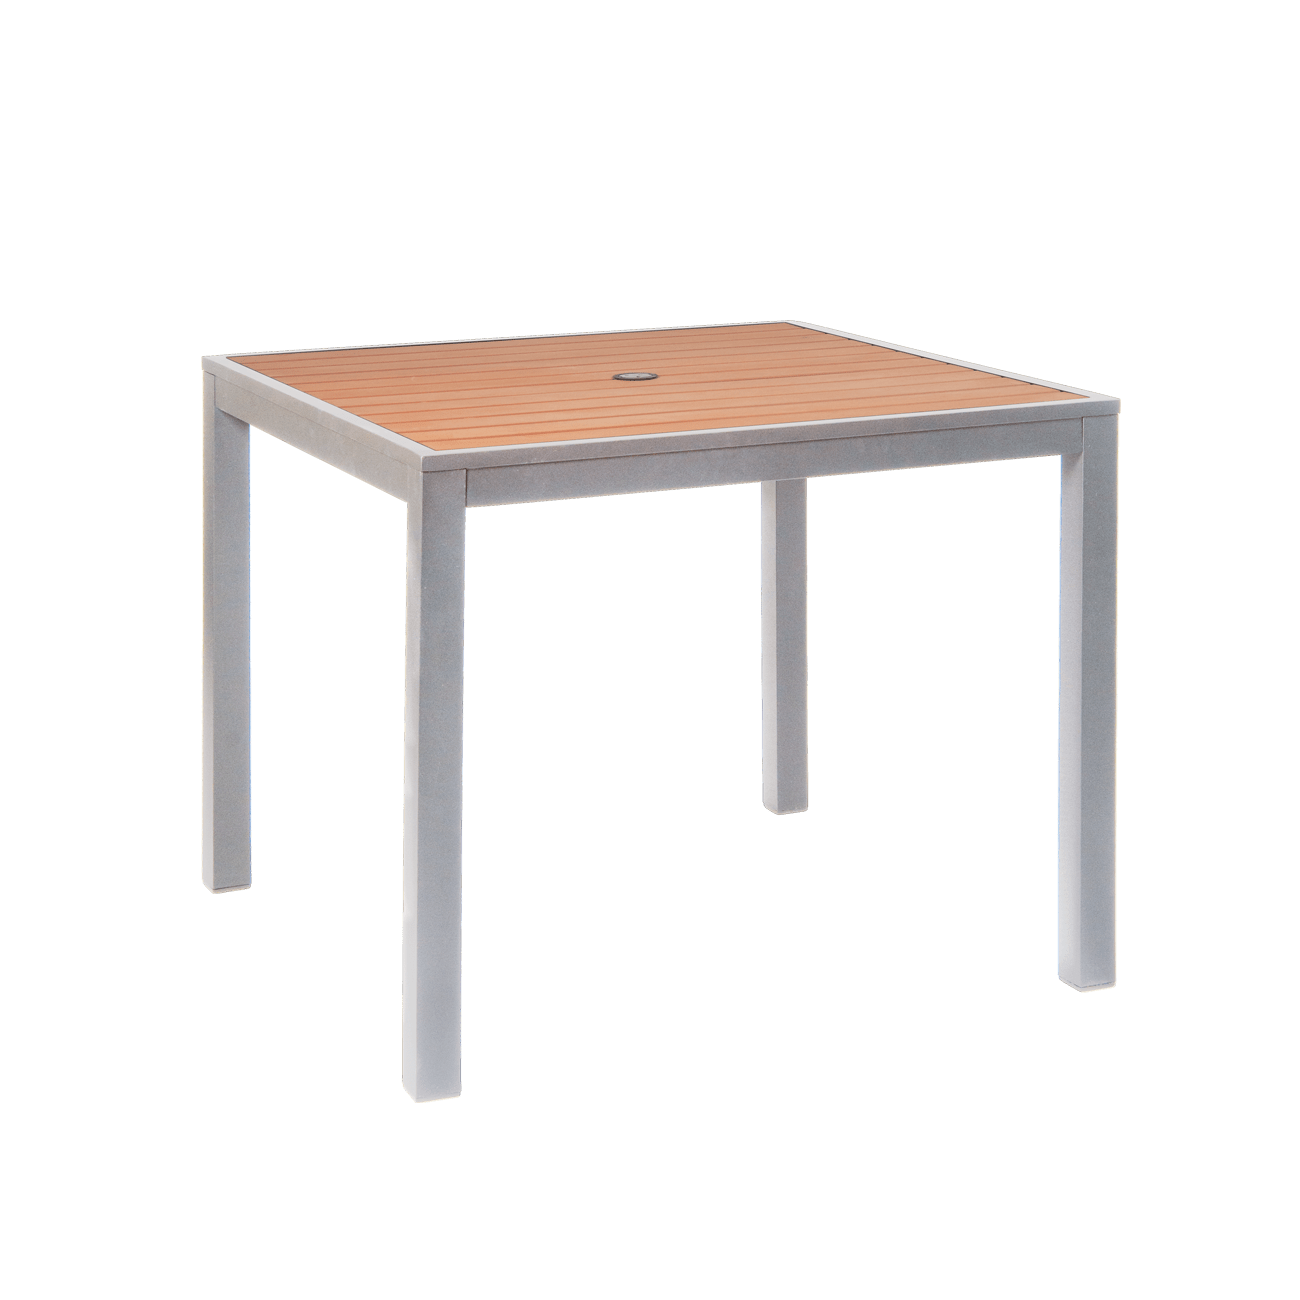 Aluminum Patio Table in Silver Finish with Plastic Teak Slats